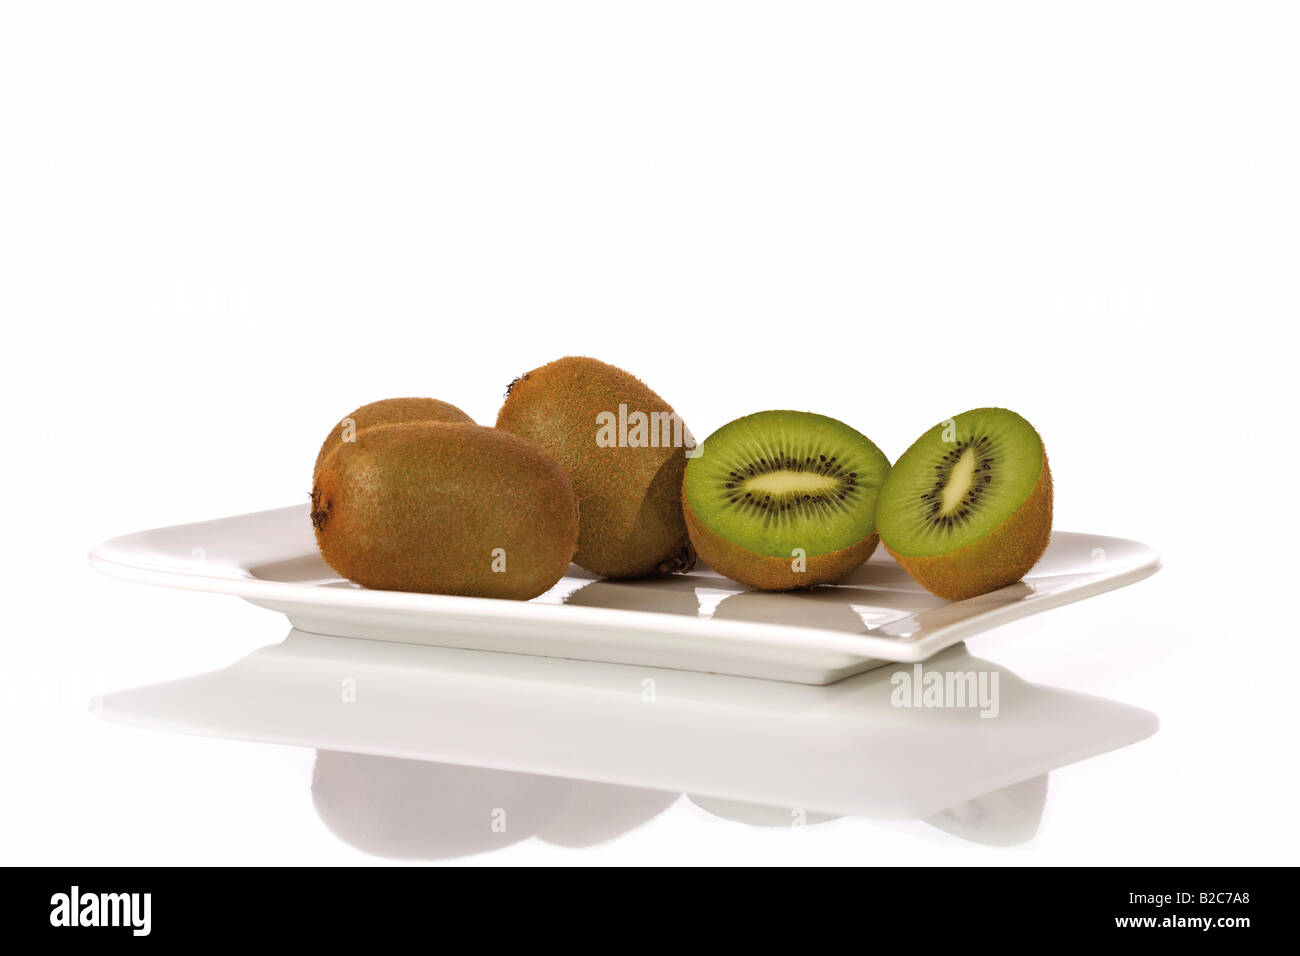 Kiwi (Actinidia deliciosa) cut into halves, on a plate Stock Photo